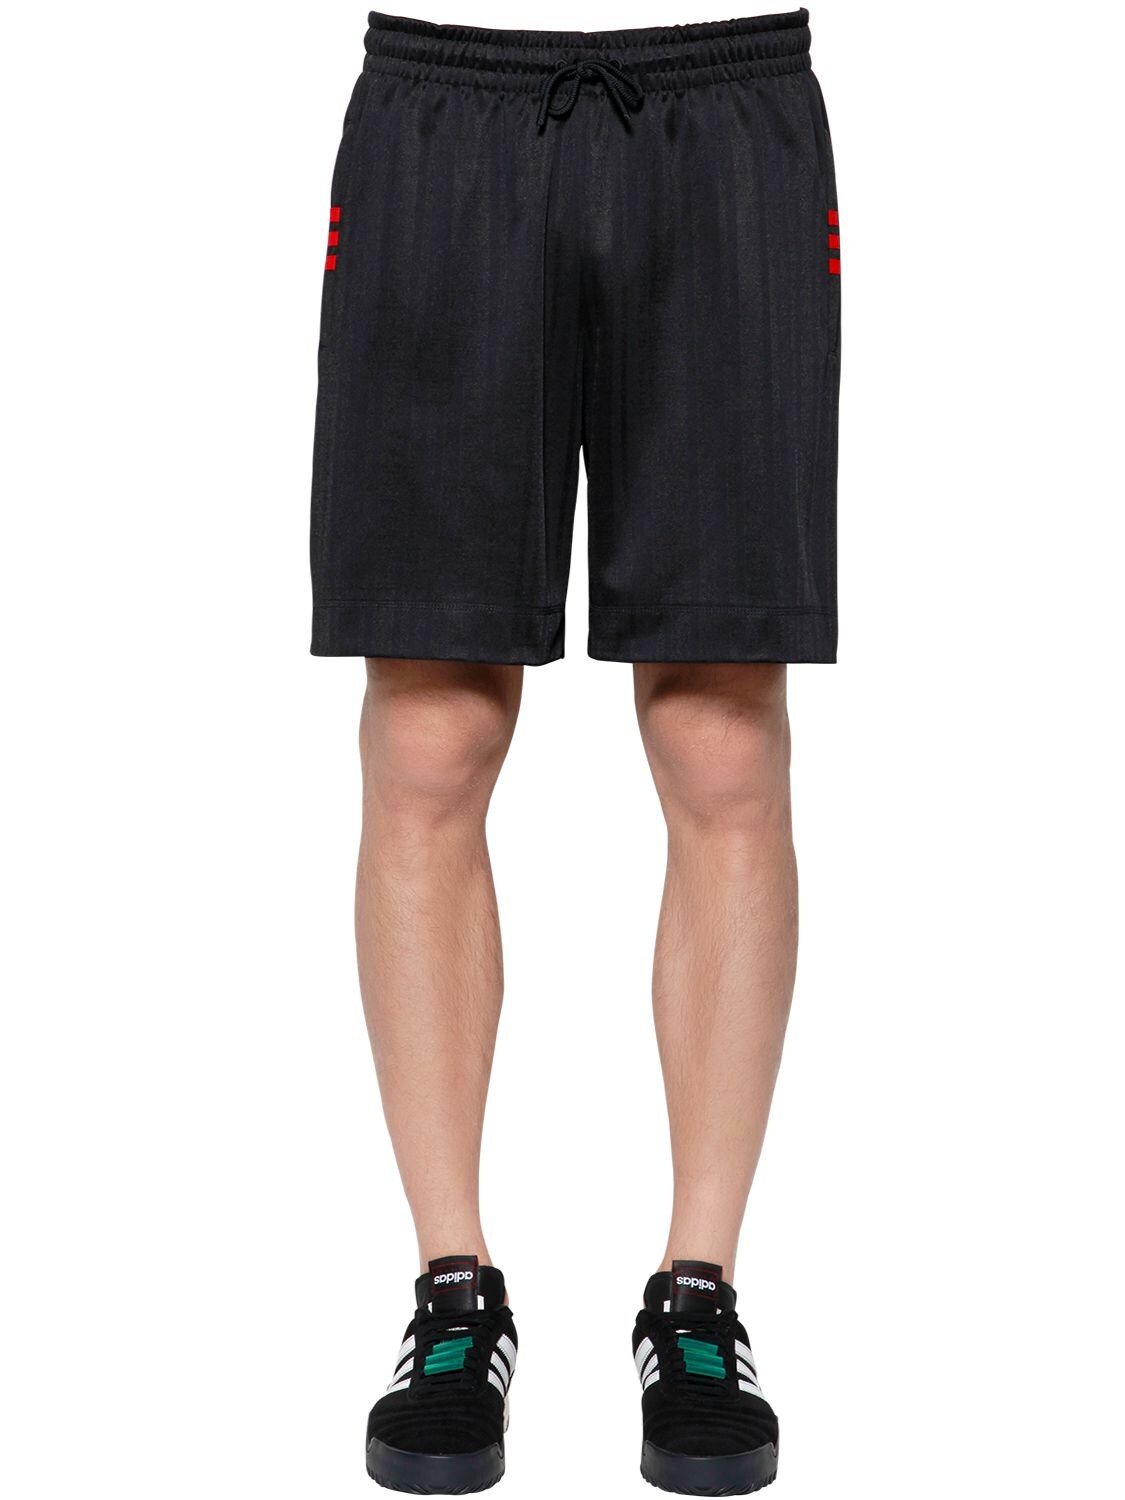 Adidas Originals By Alexander Wang Aw Logo Jacquard Track Shorts In Black/red